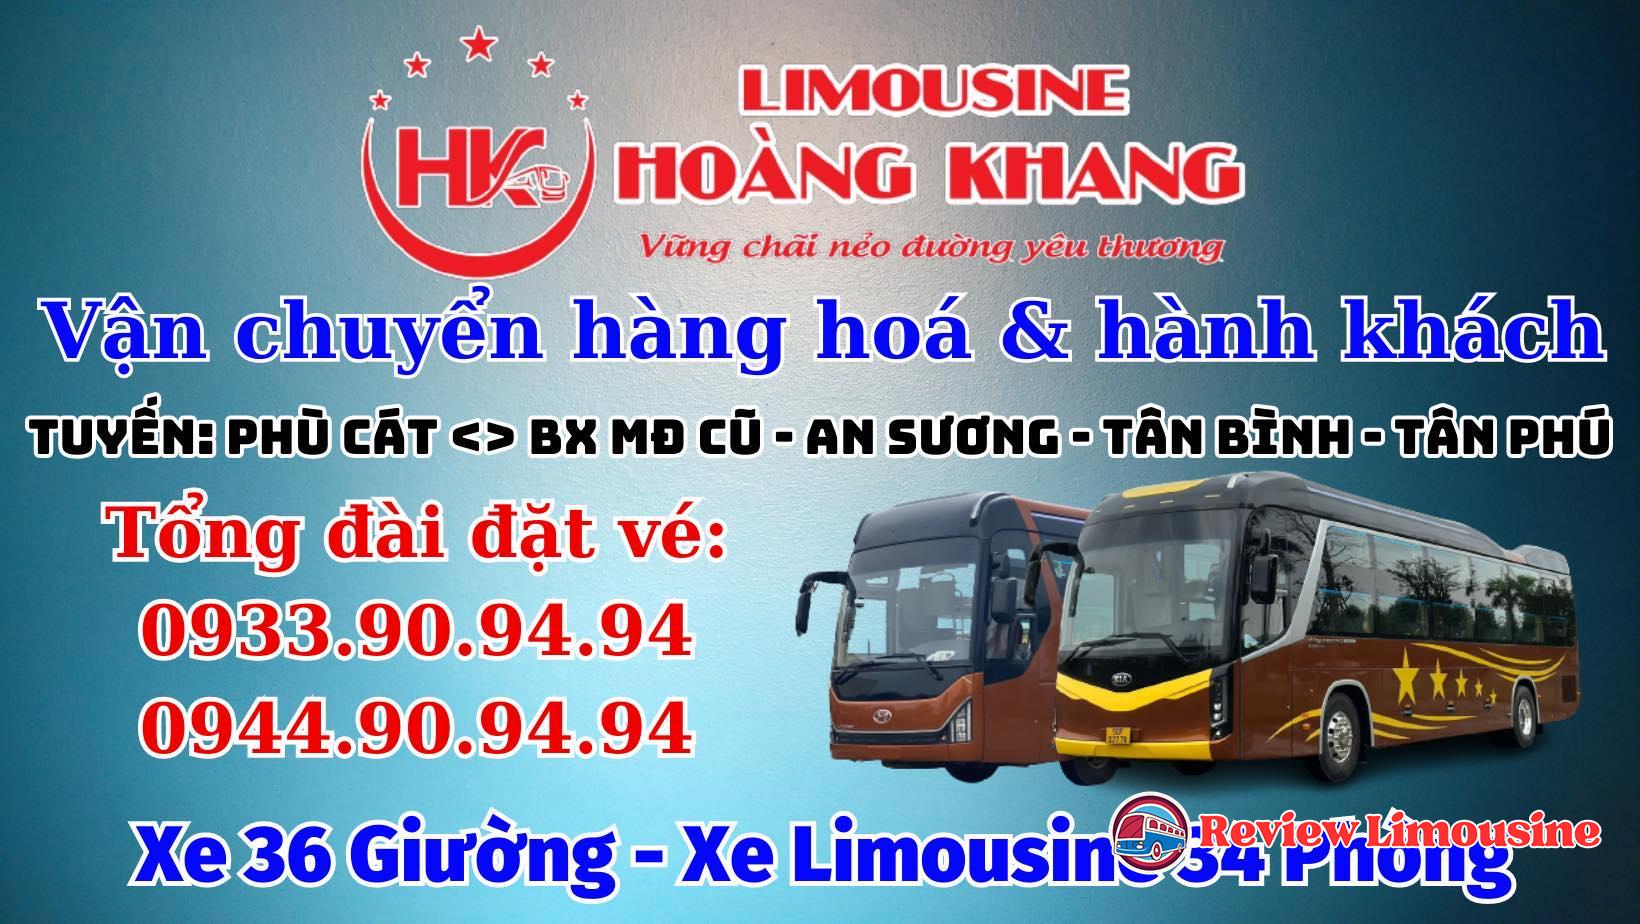 Hoàng Khang Limousine